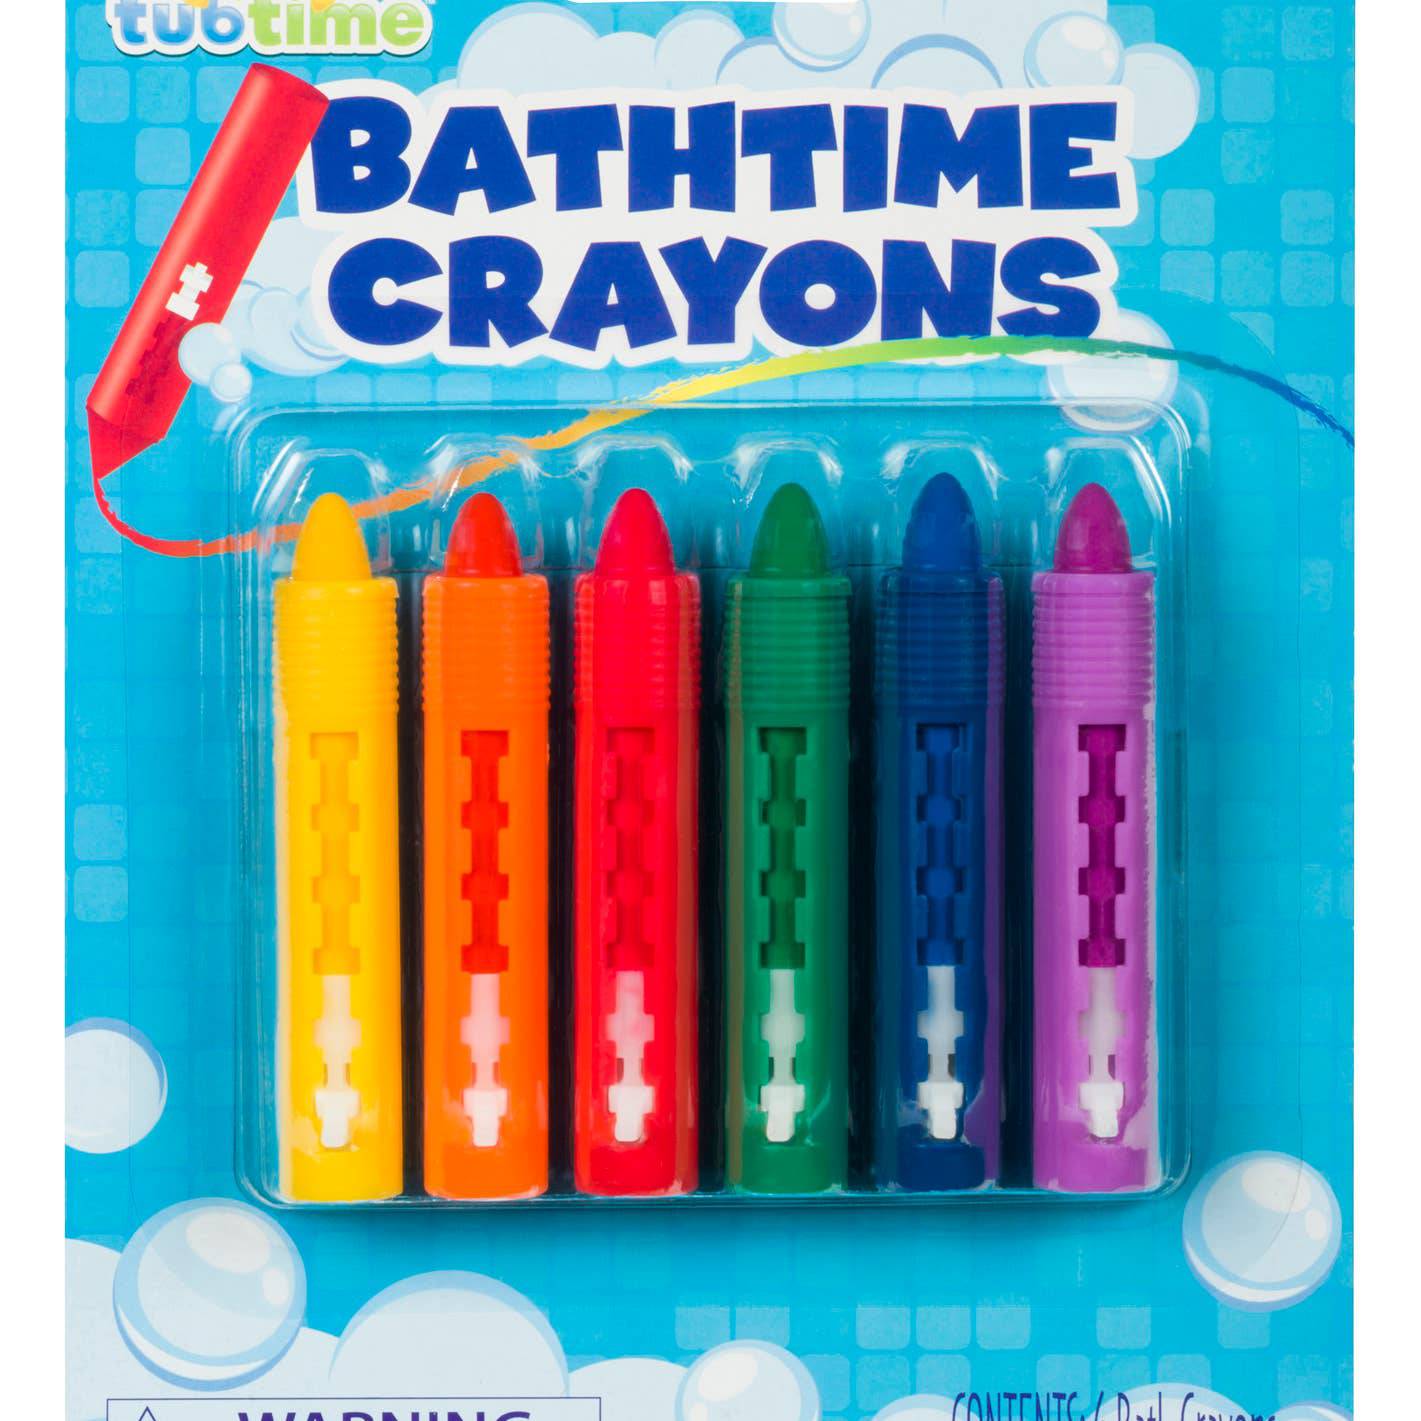 Bathtime Crayons - Twinkle Twinkle Little One